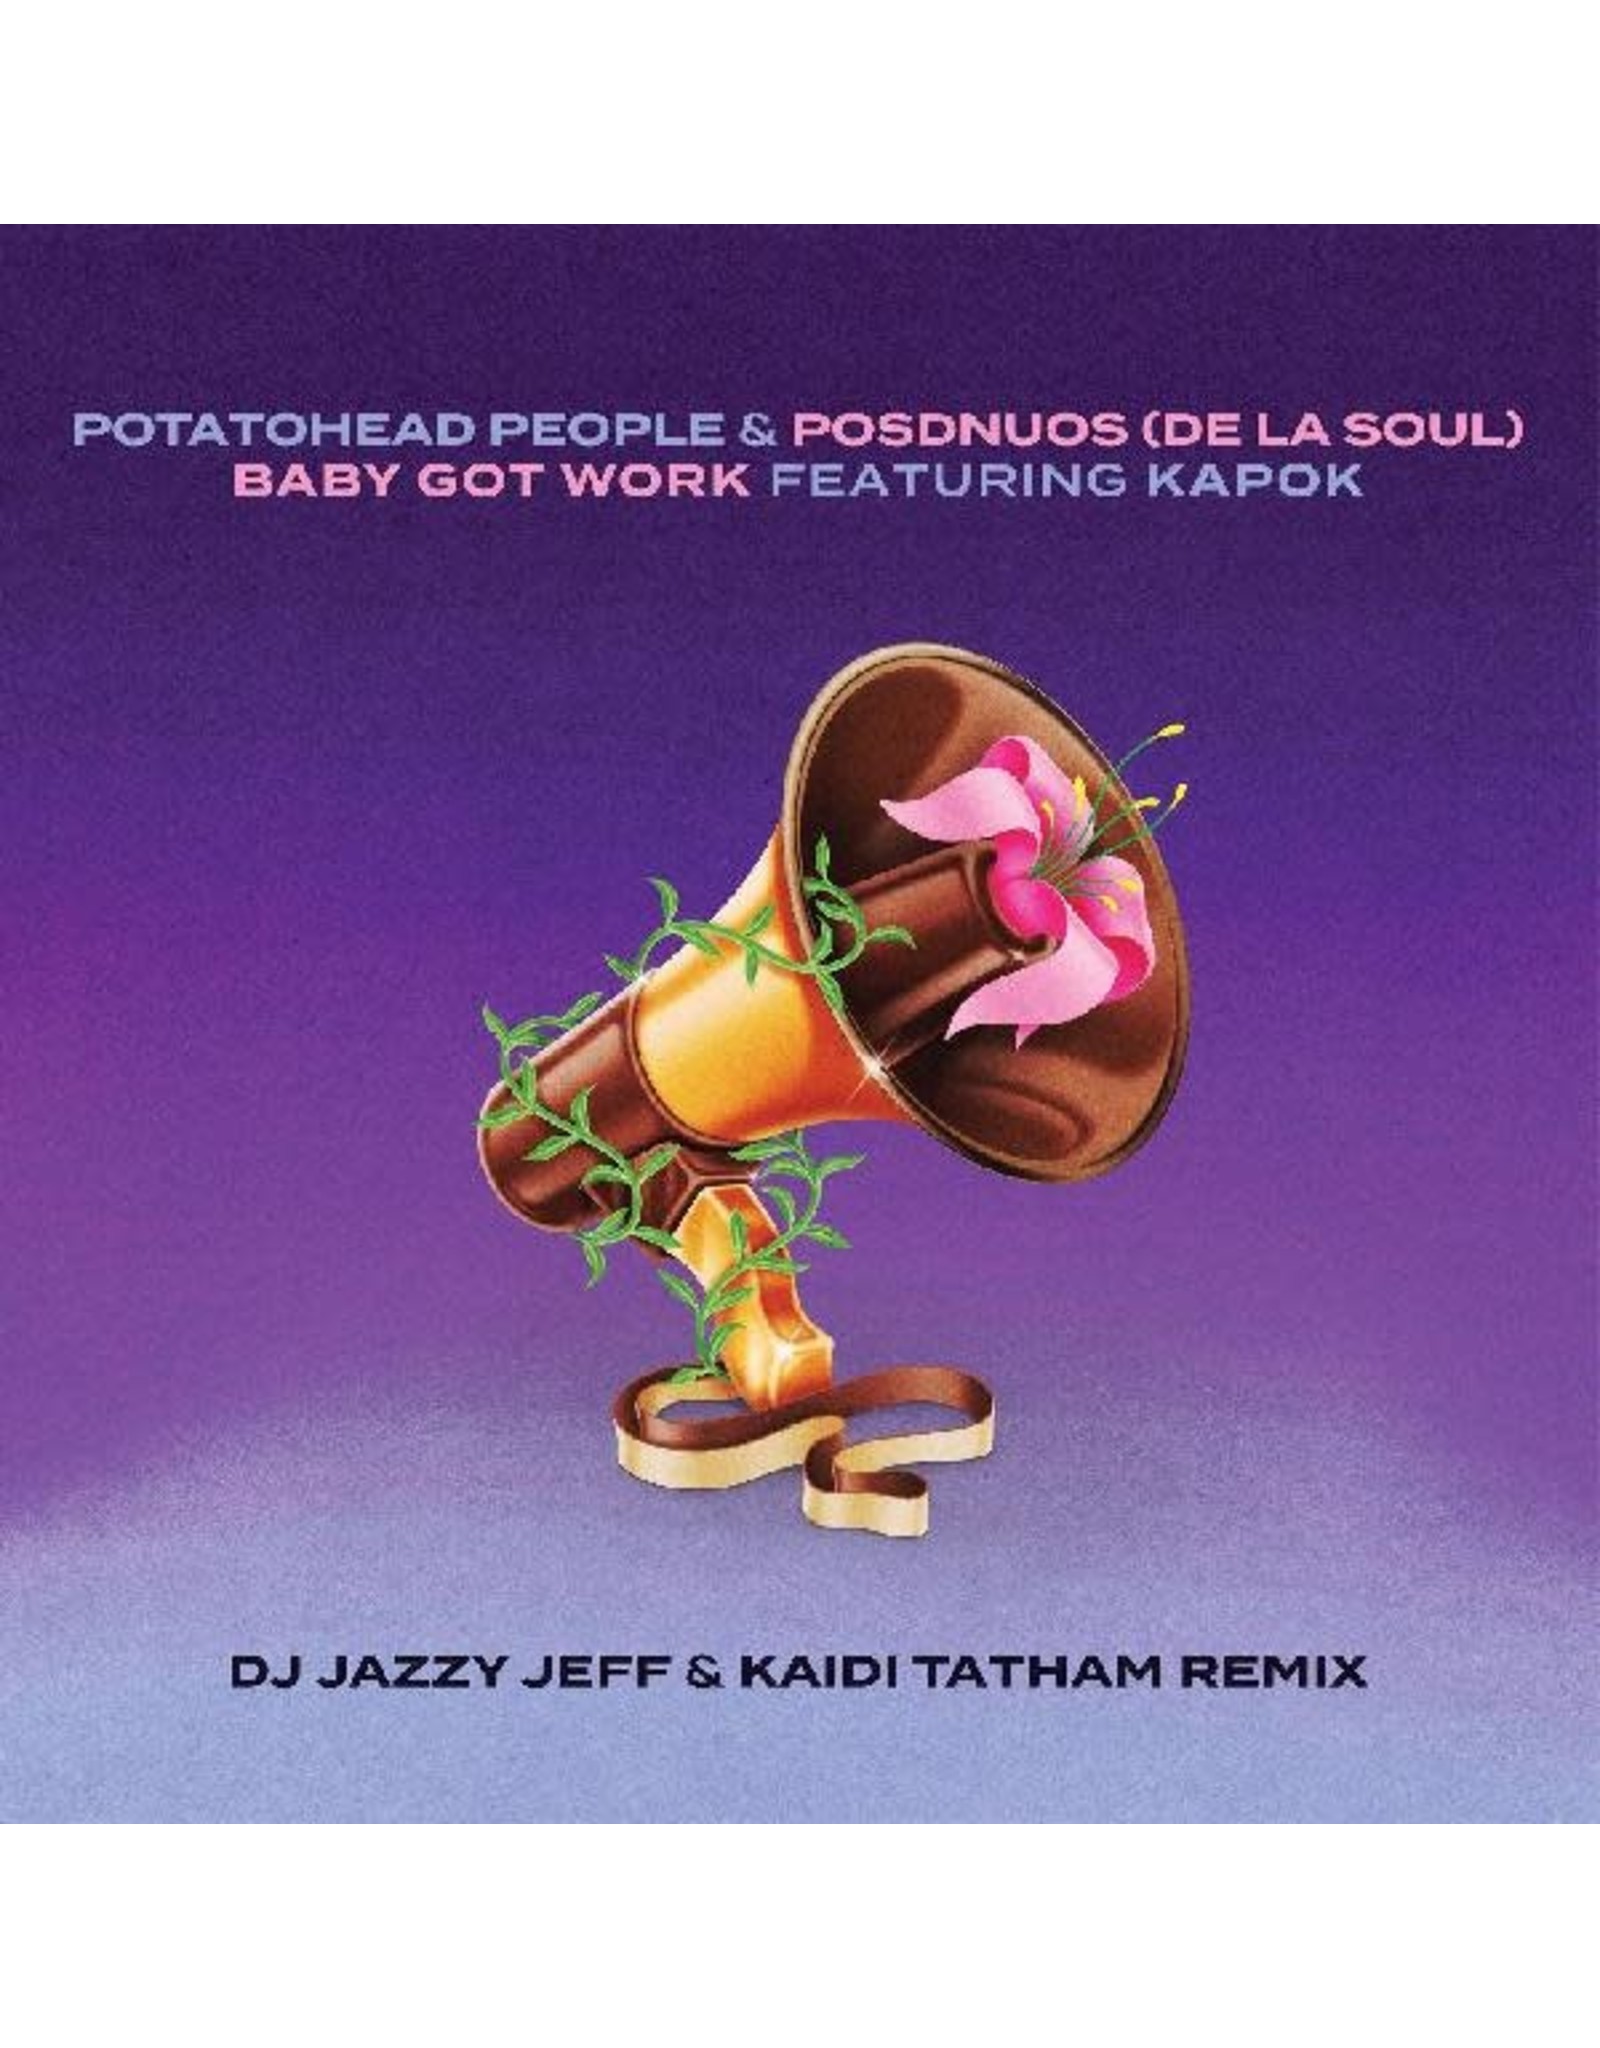 New Vinyl Potatohead People & De La Soul - Baby Got Work [DJ Jazzy Jeff & Kaidi Tatham Remix] 7"